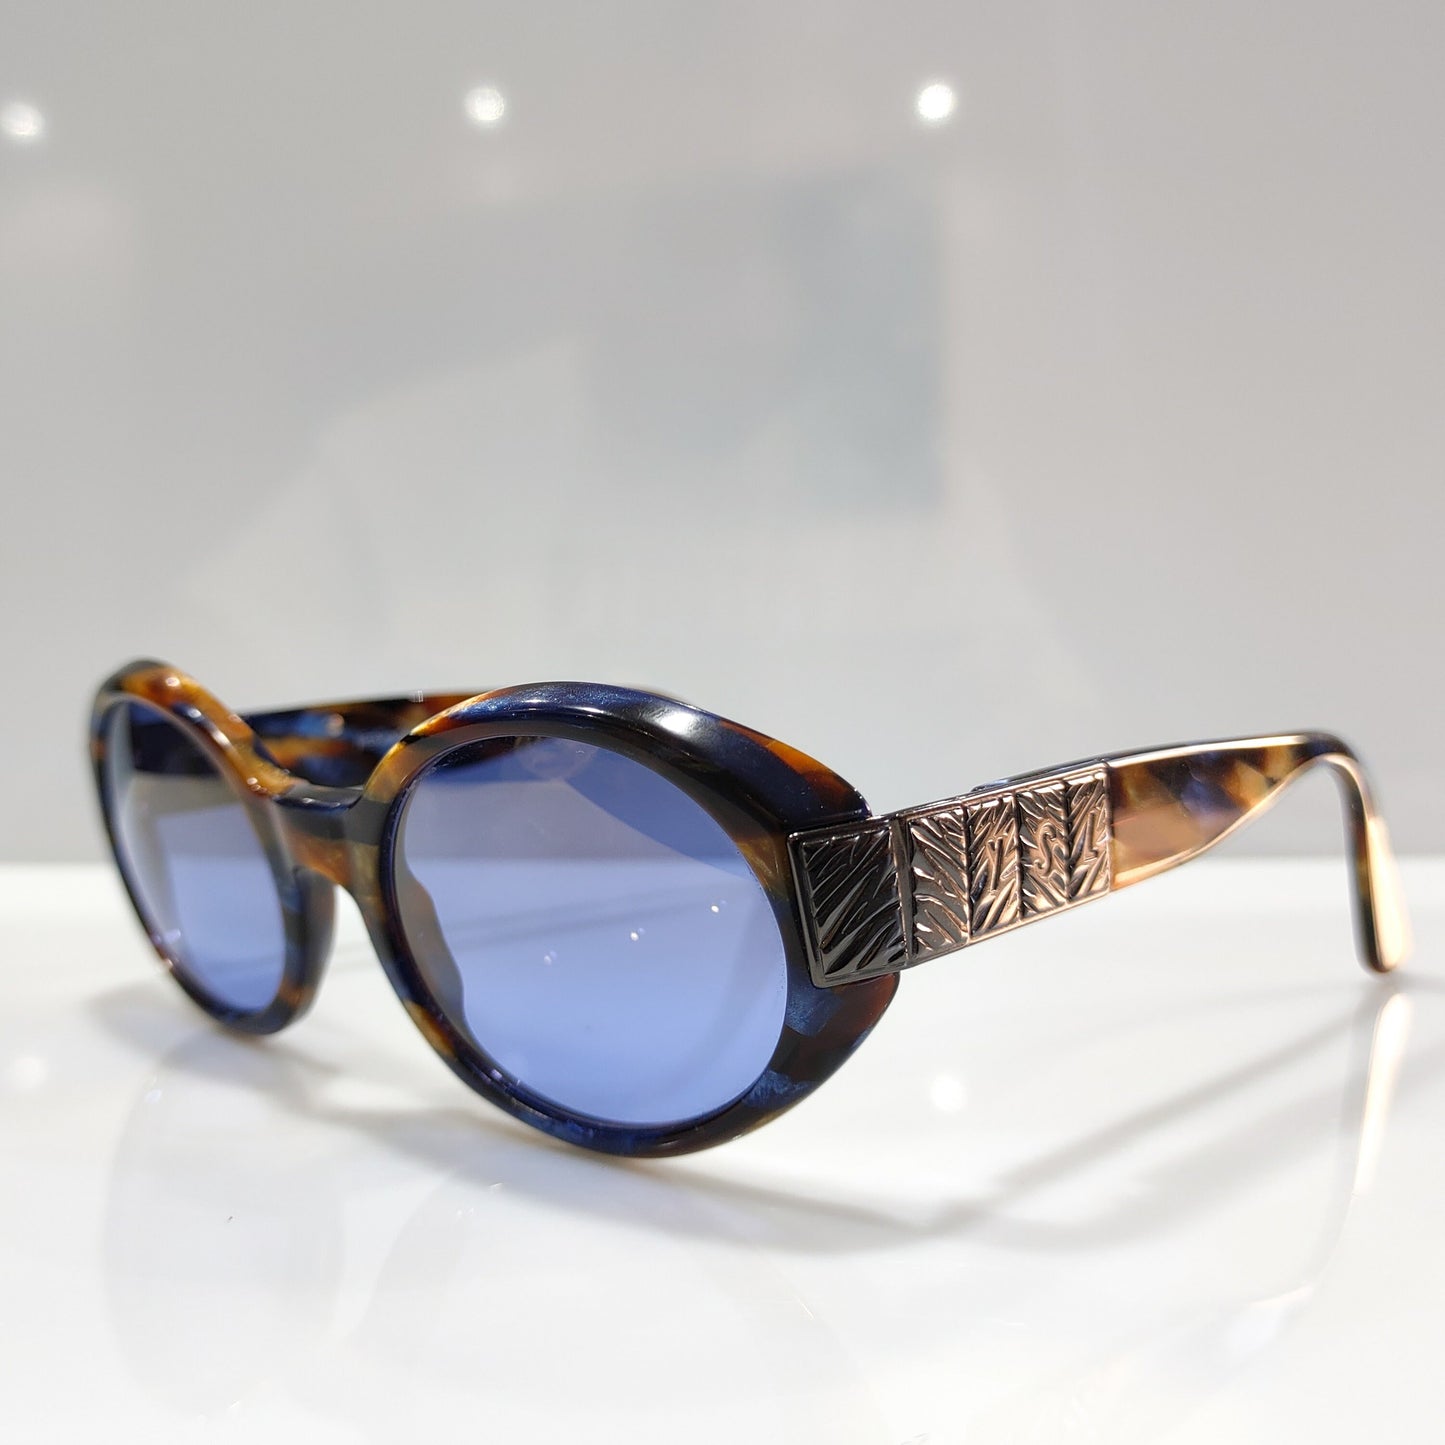 Yves Saint Laurent 6548 occhiali da sole vintage occhiali lunetta brille anni '90